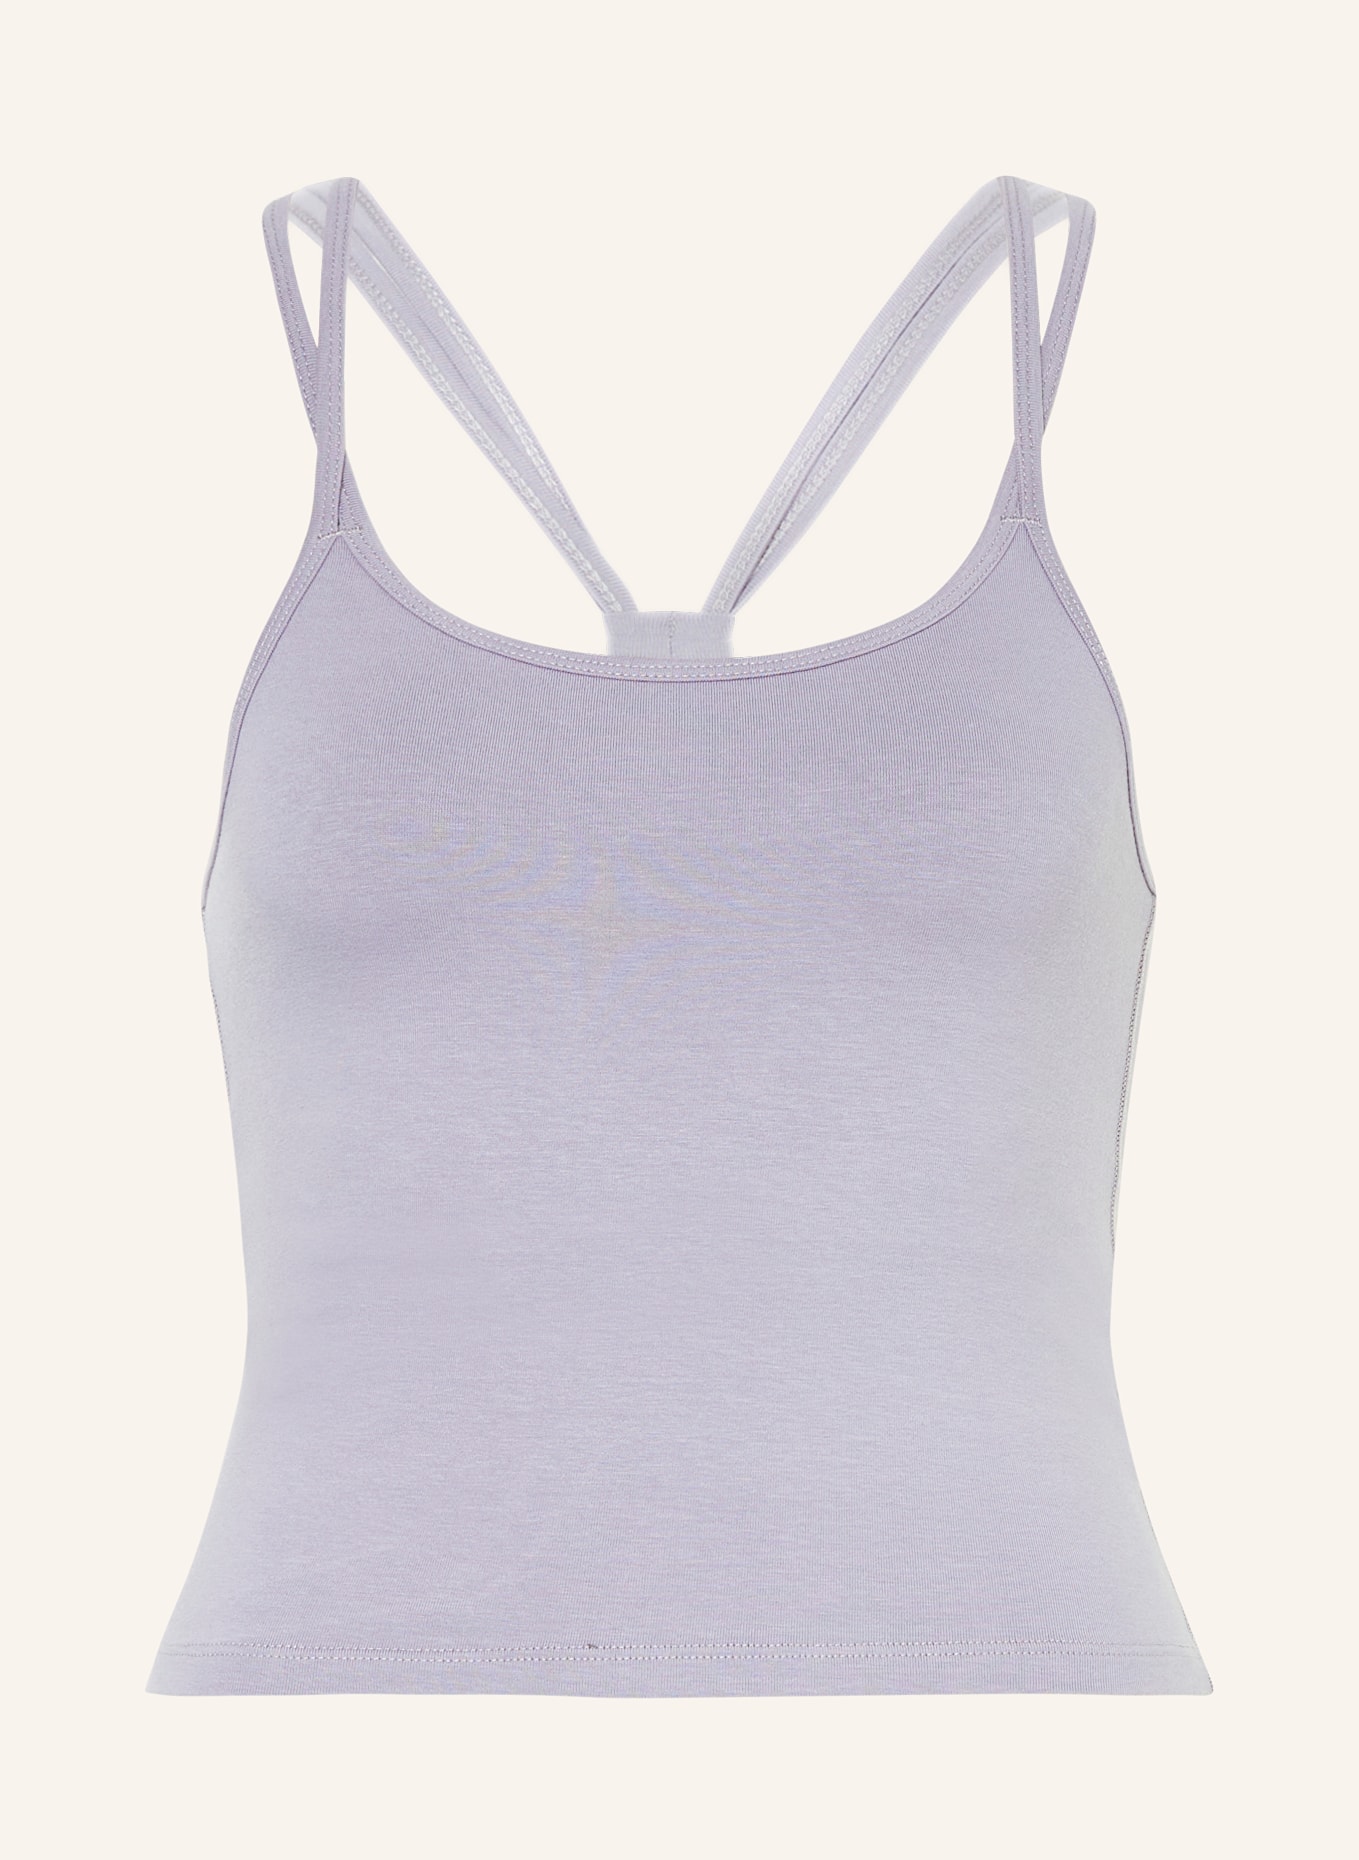 MANDALA Yoga-Top, Farbe: HELLLILA (Bild 1)